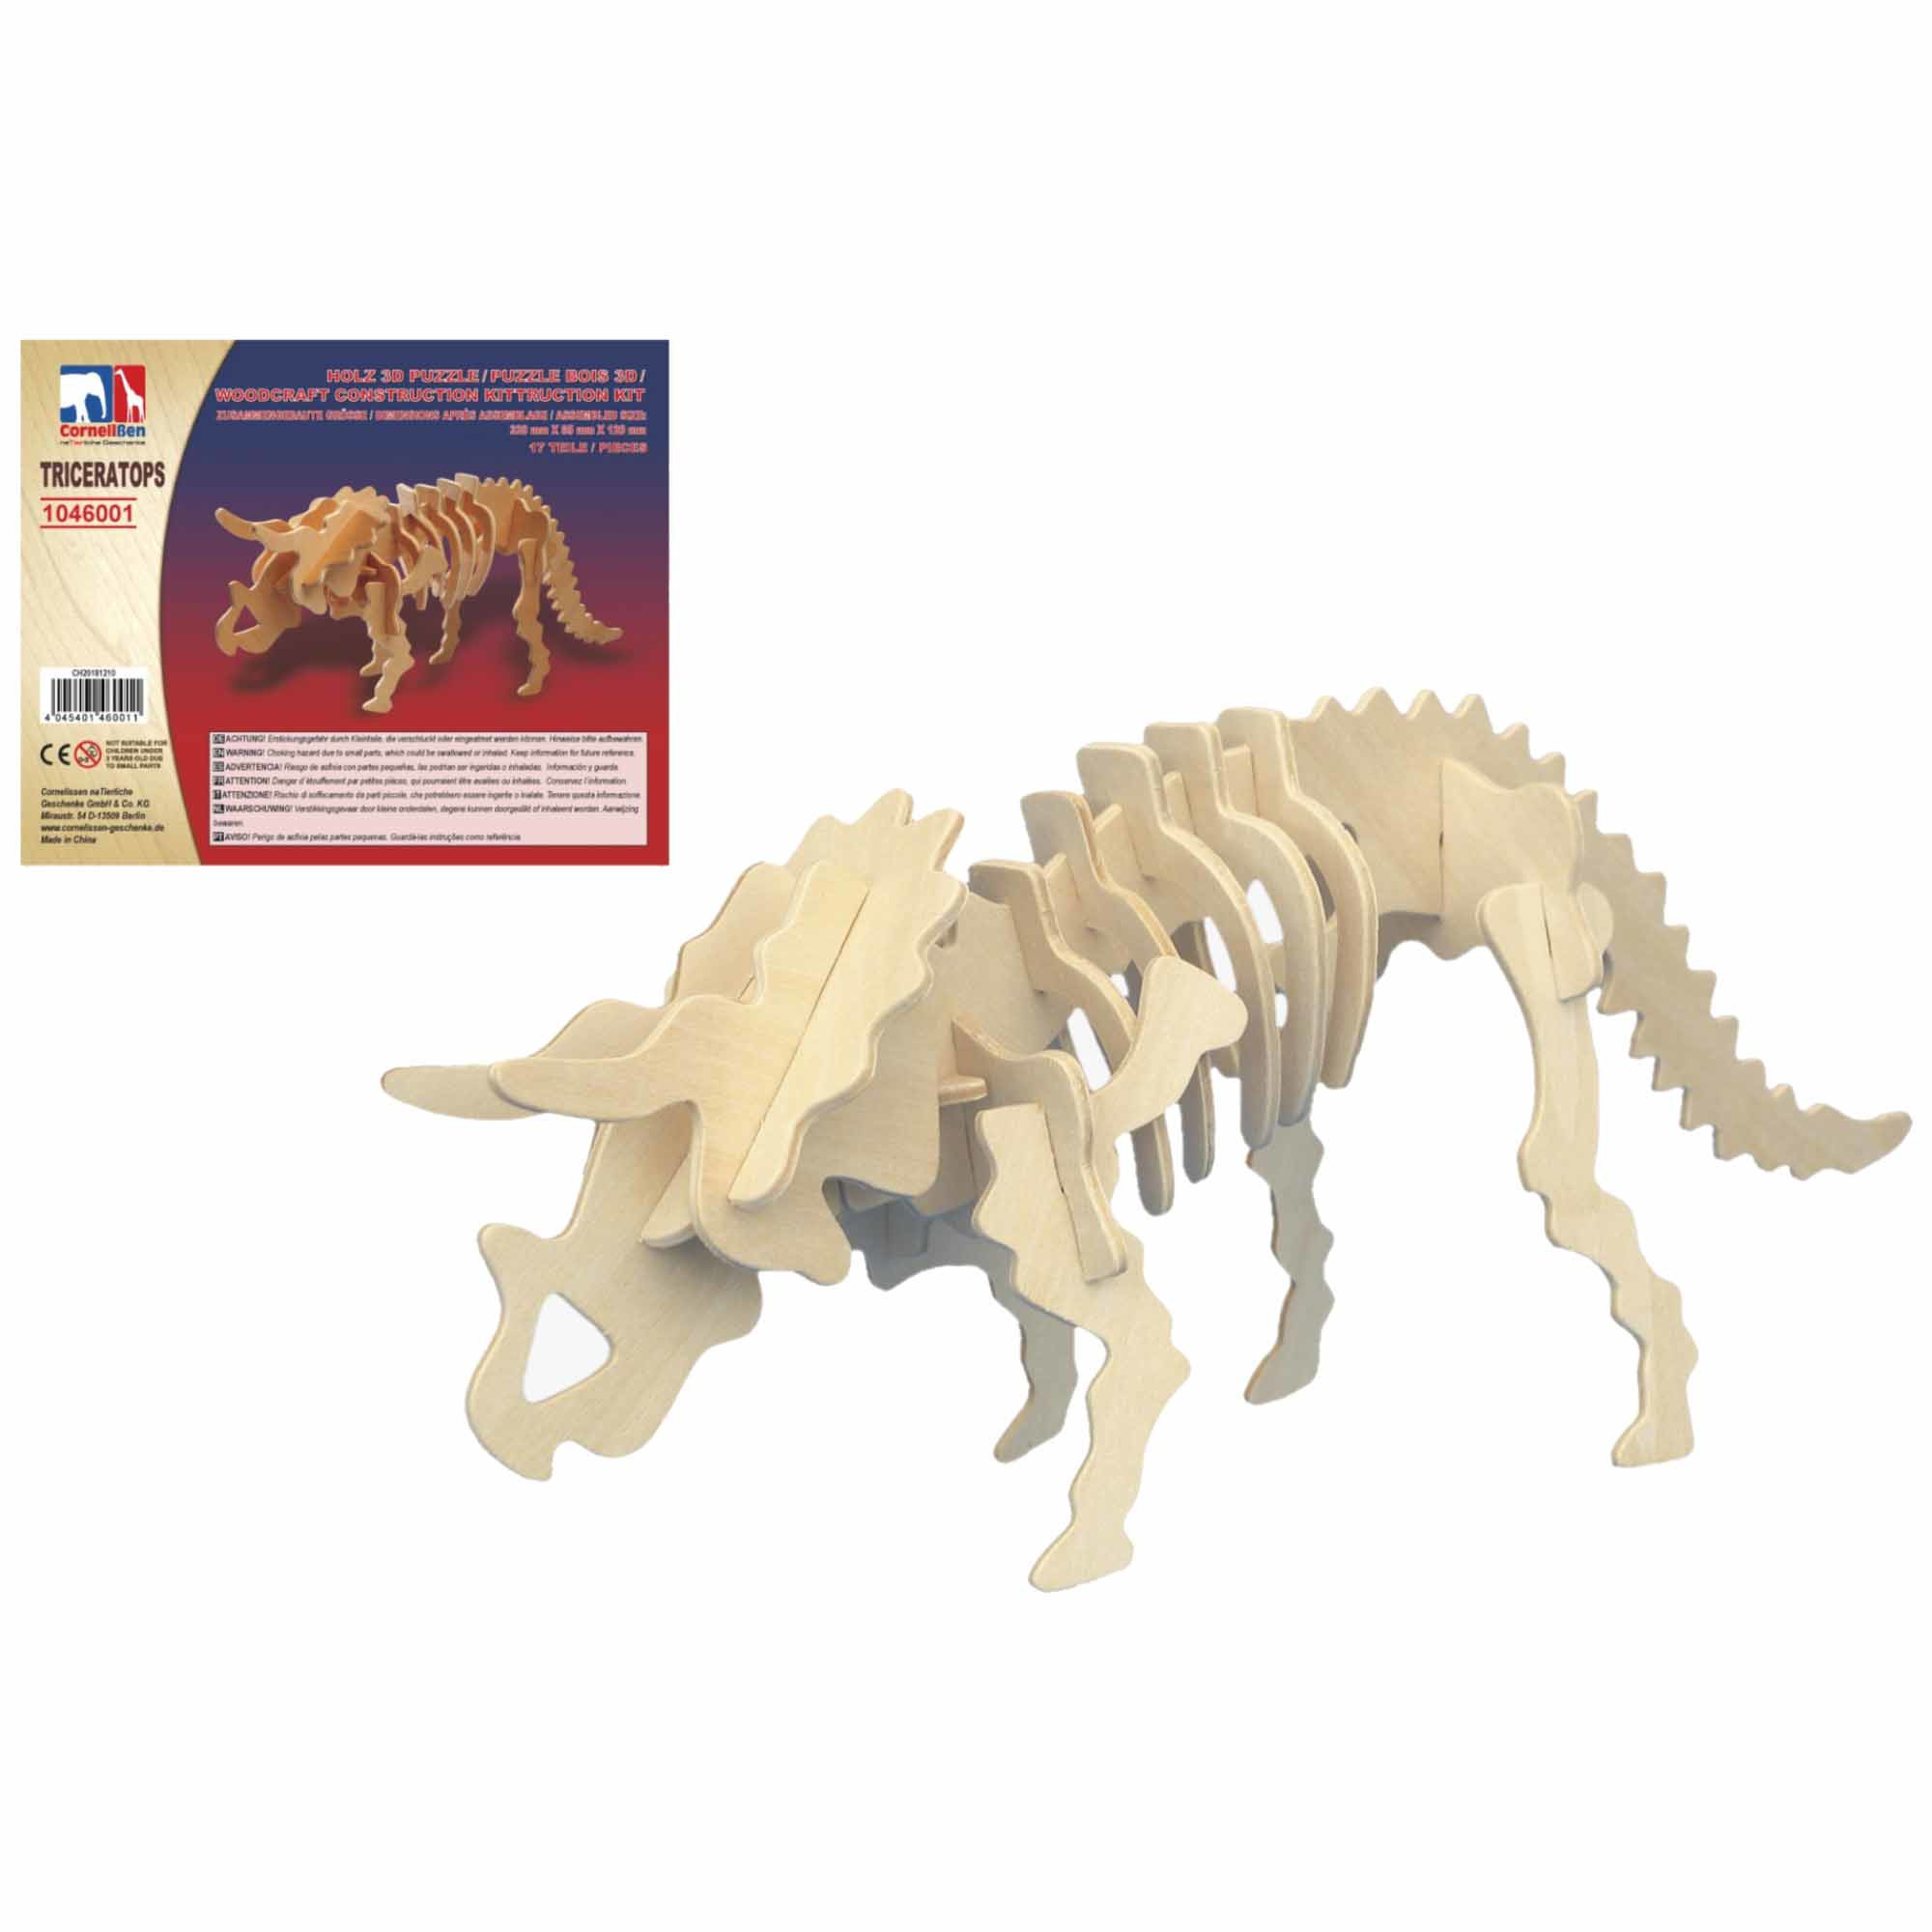 Houten 3D puzzel Triceratops dinosaurus 32 cm